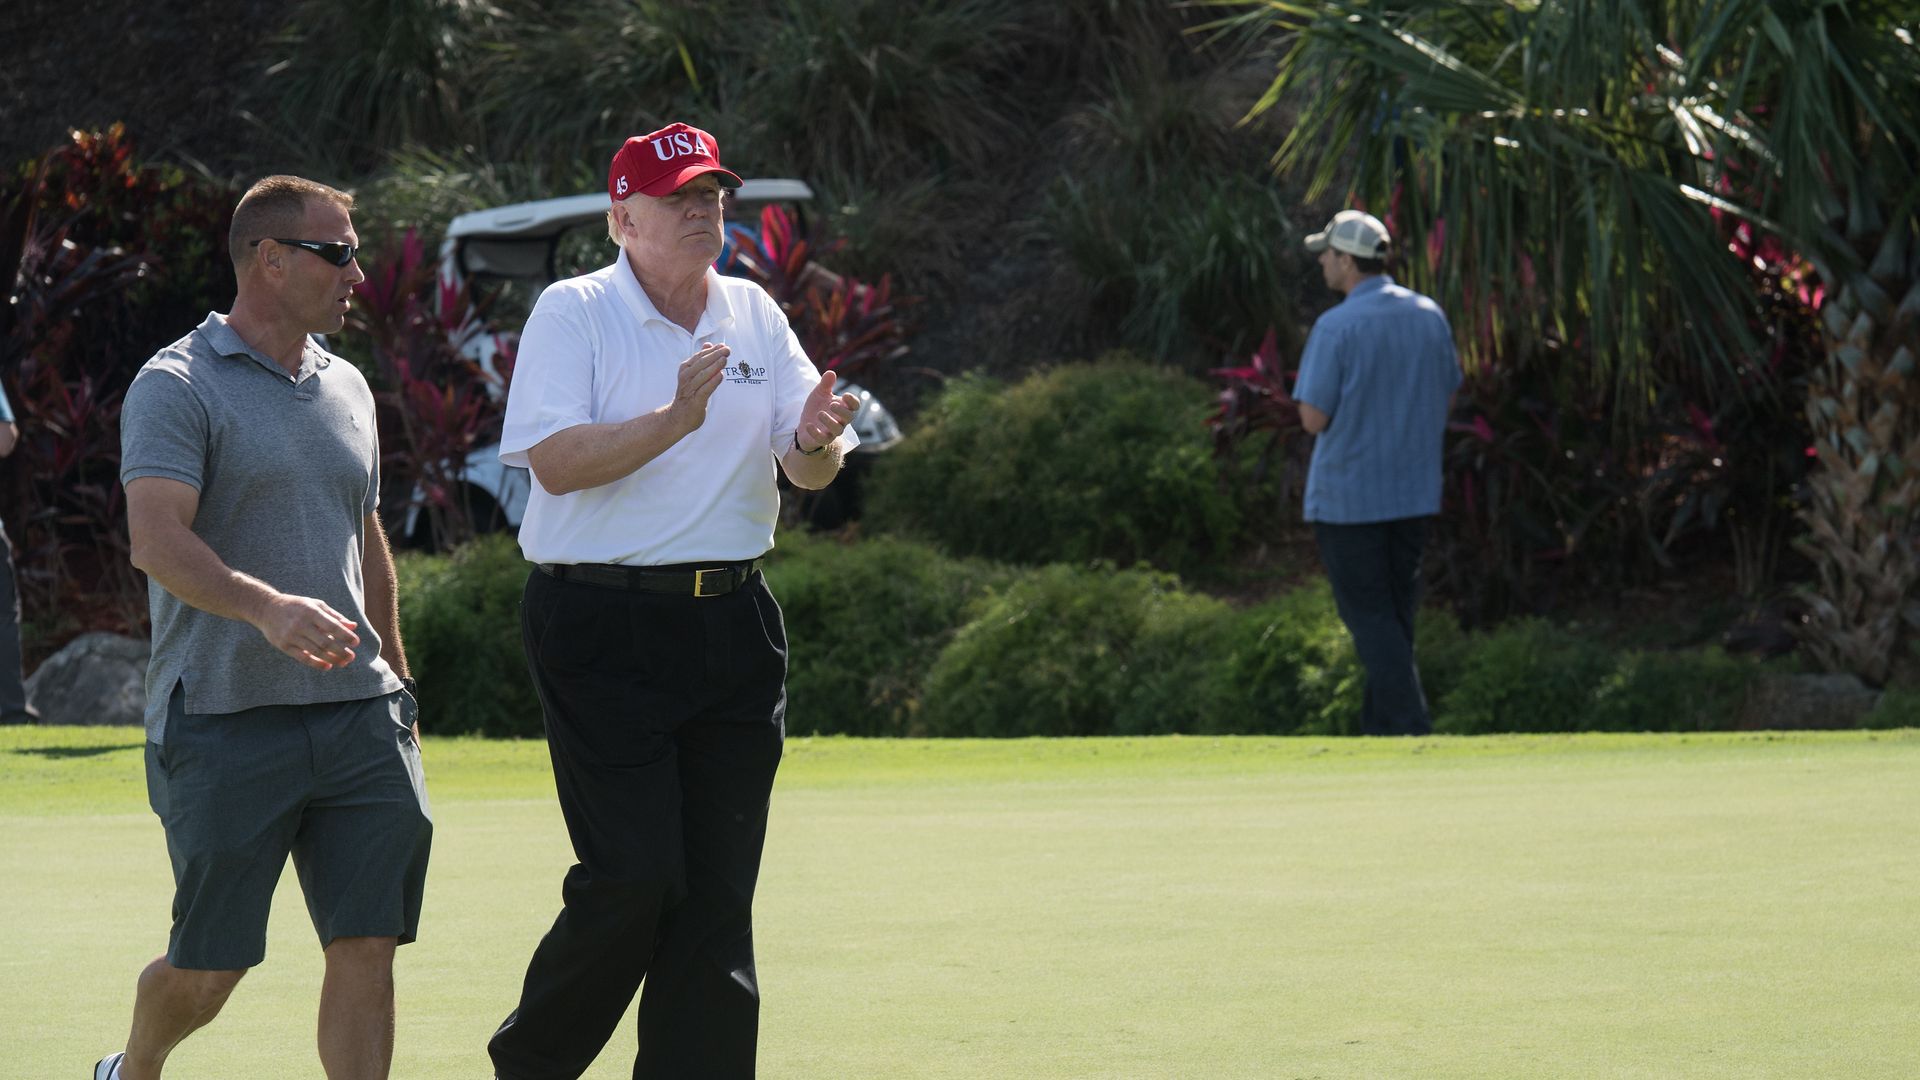 President Donald Trump at Mar-A-Lago golf course